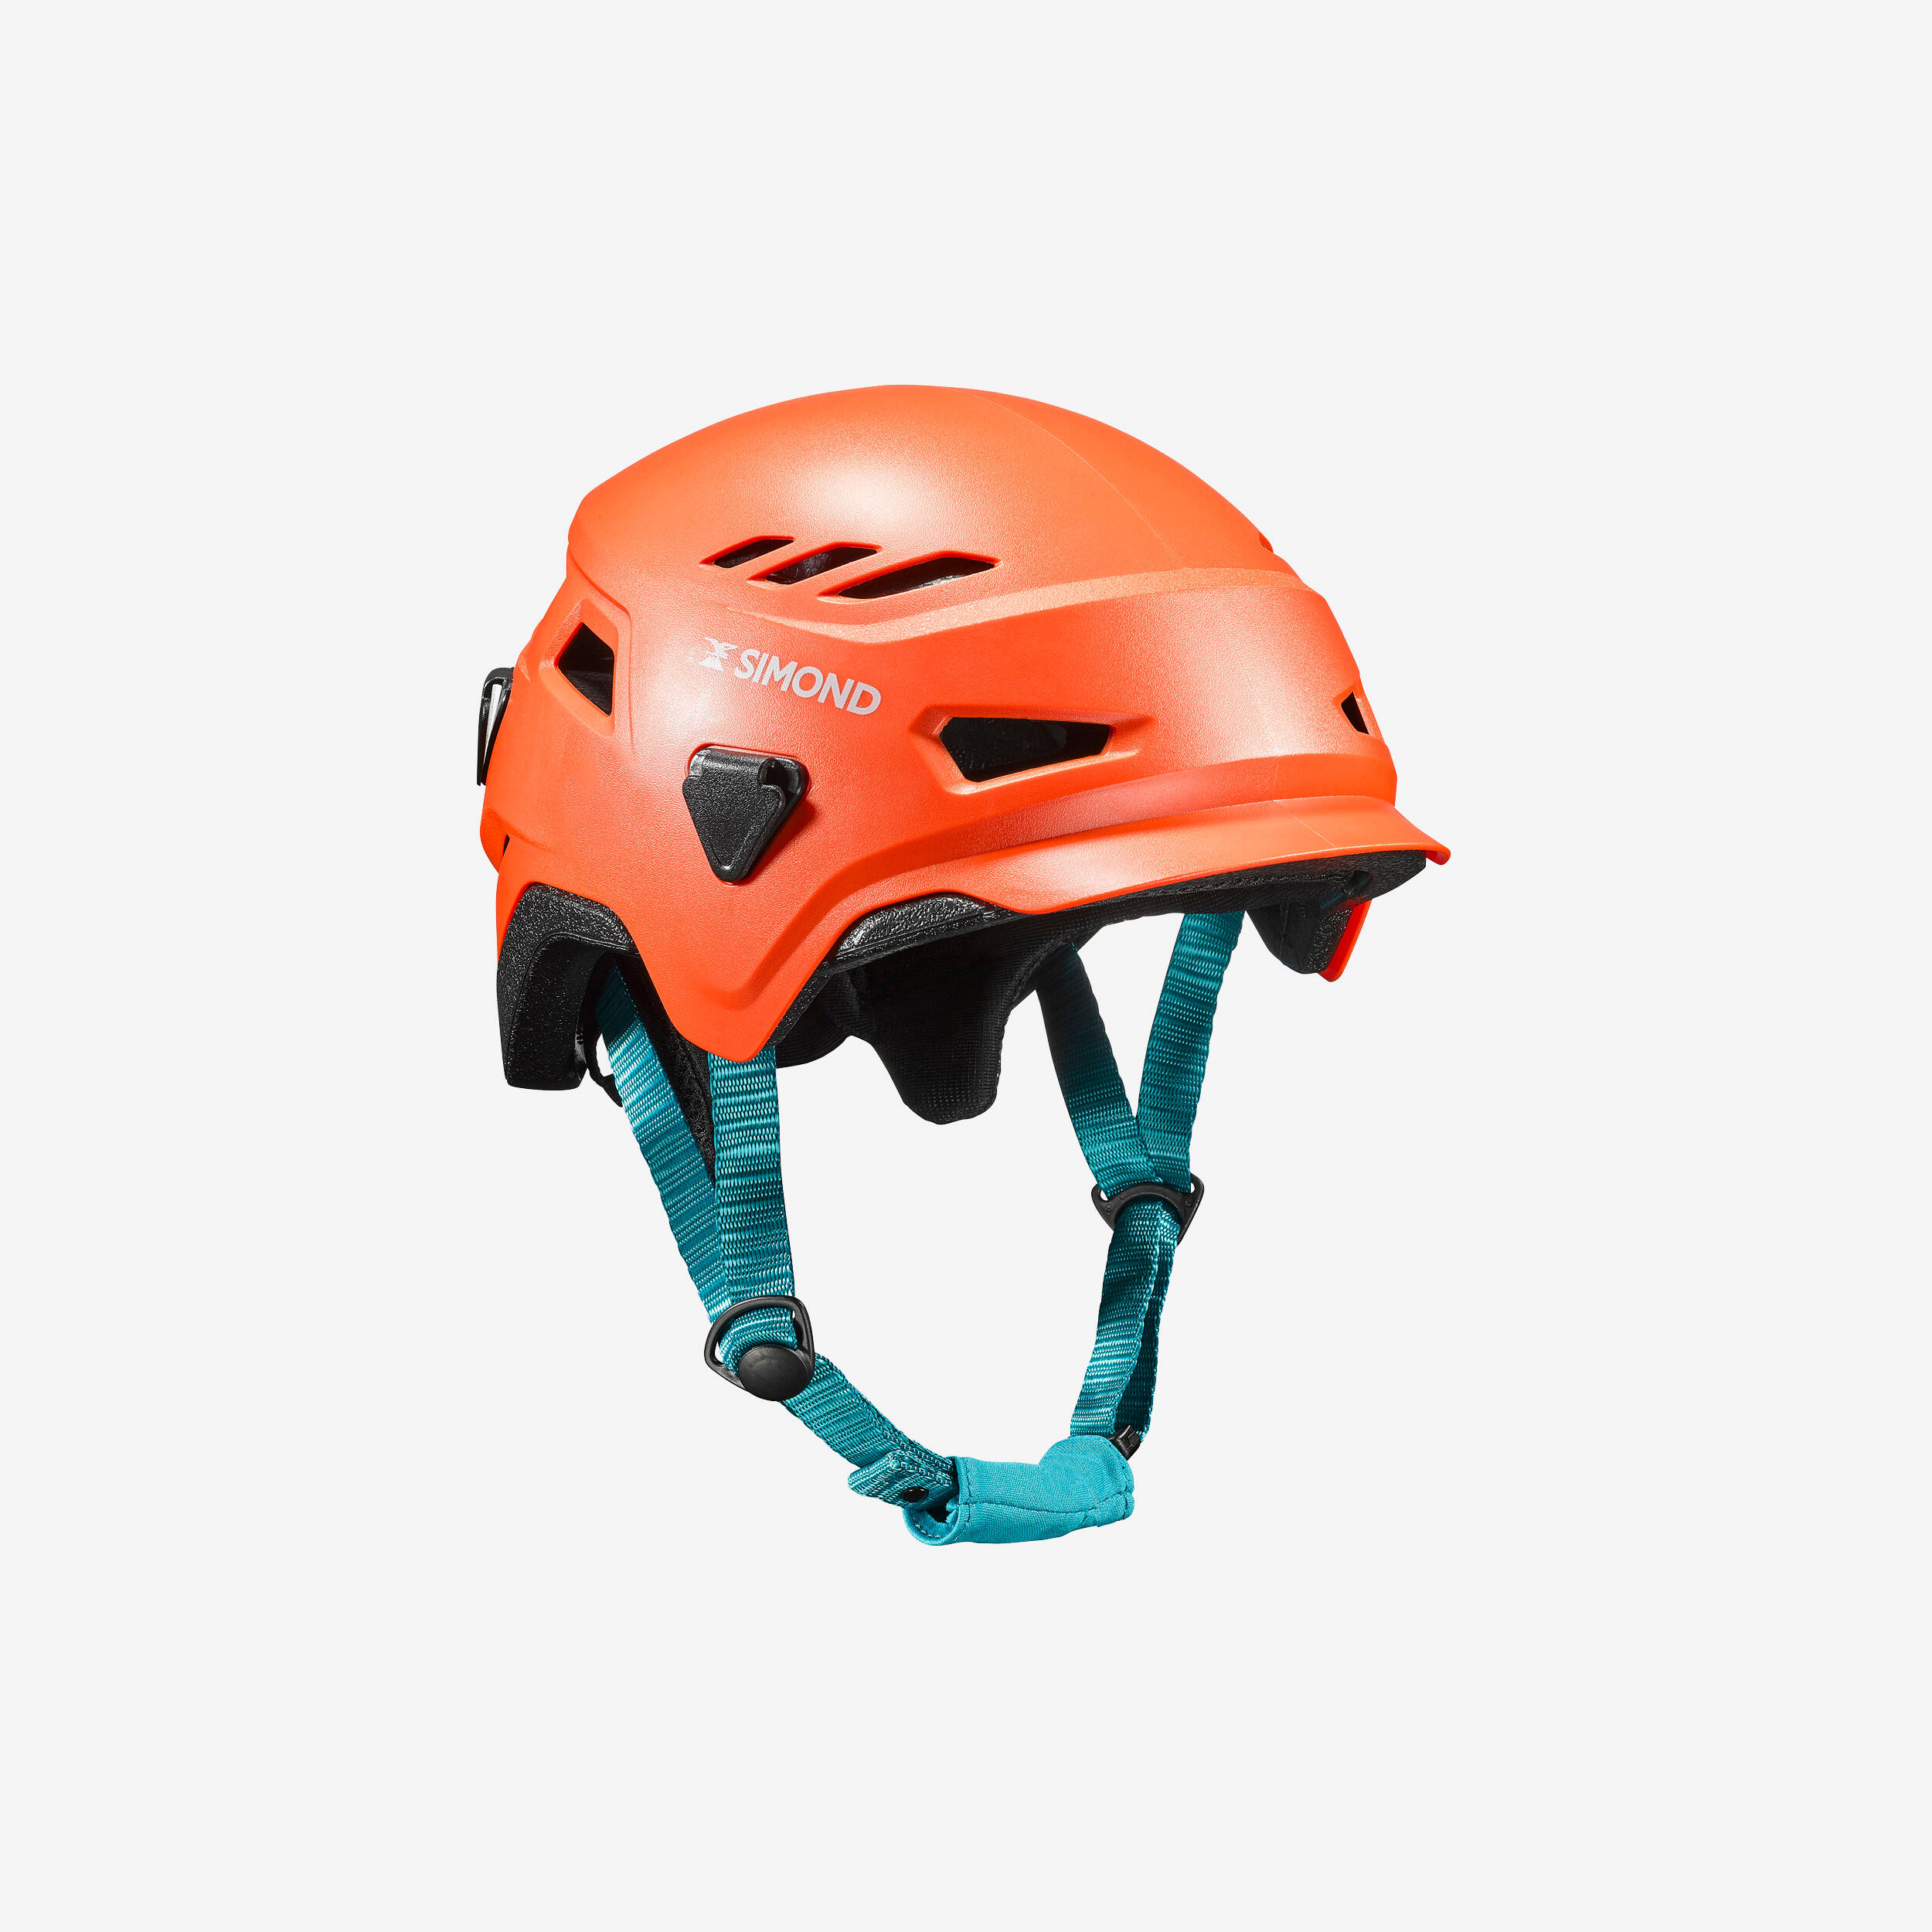 Salewa Vega - Climbing helmet, Free EU Delivery